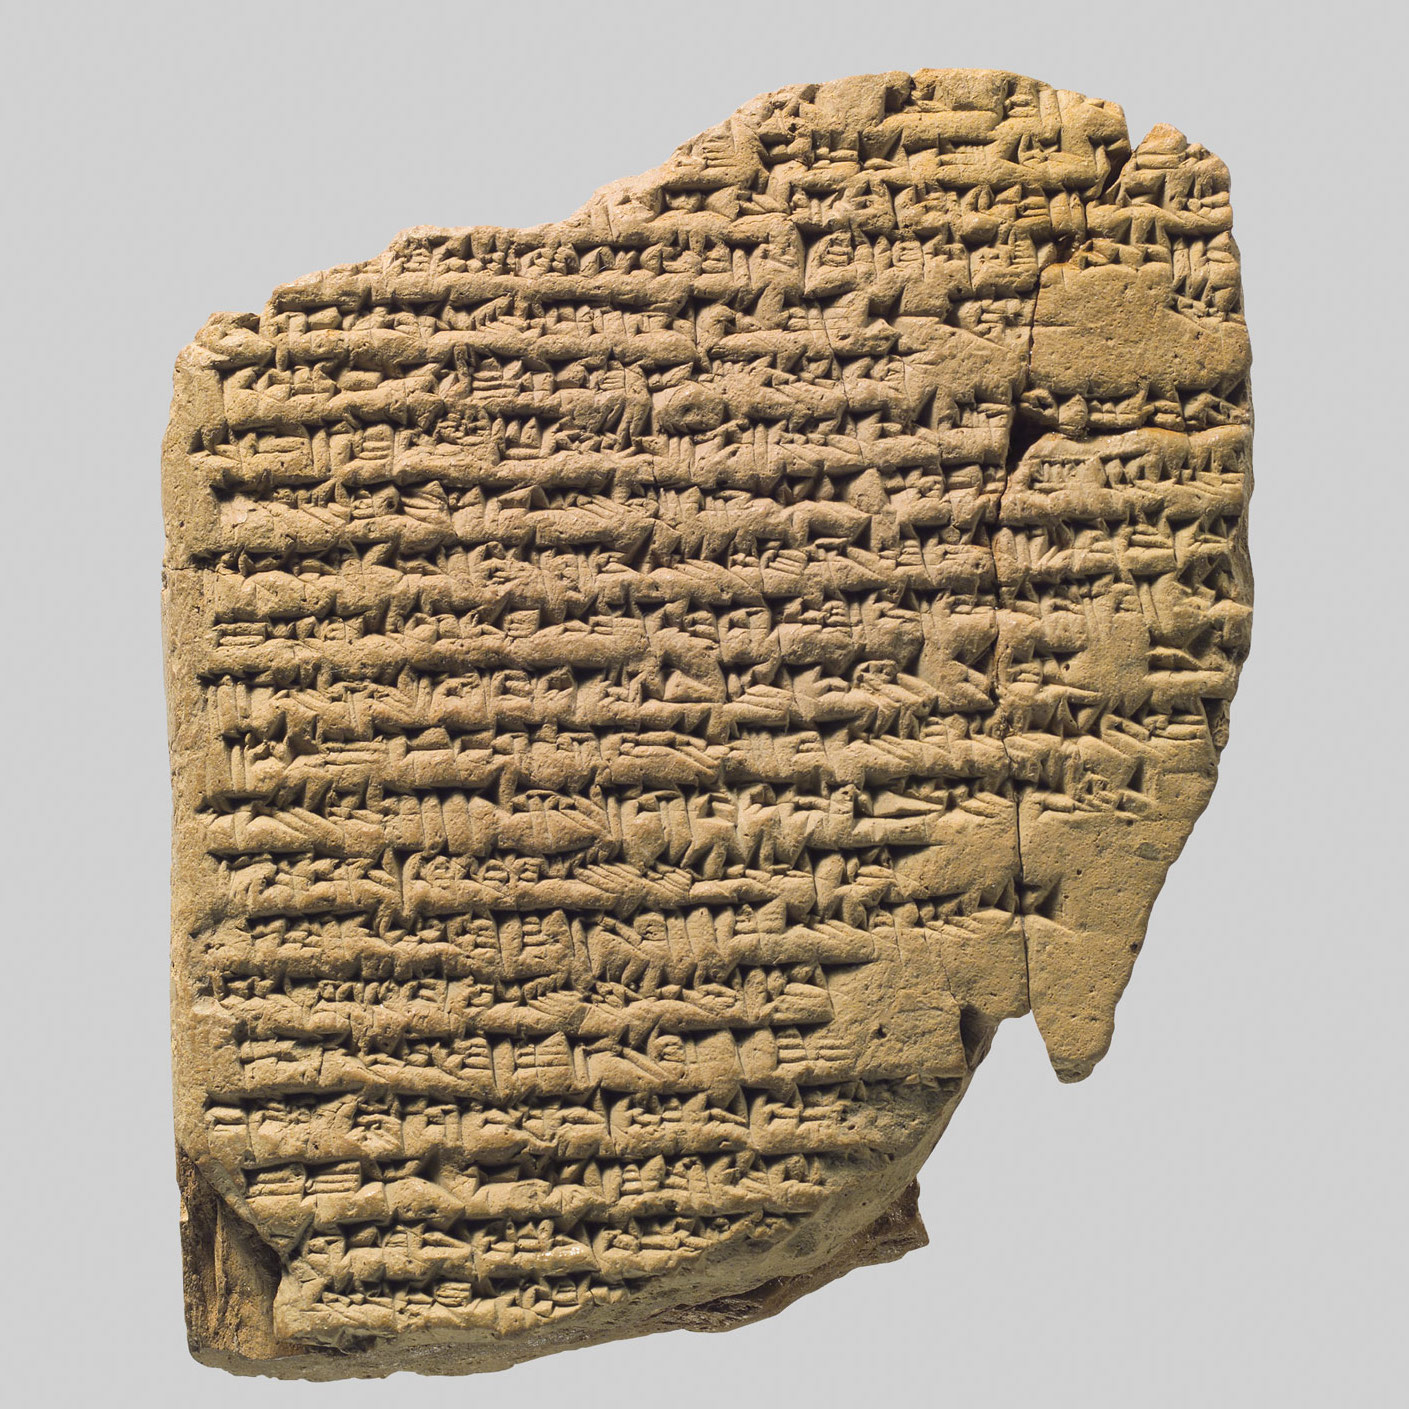 cuneiform-art-history-glossary